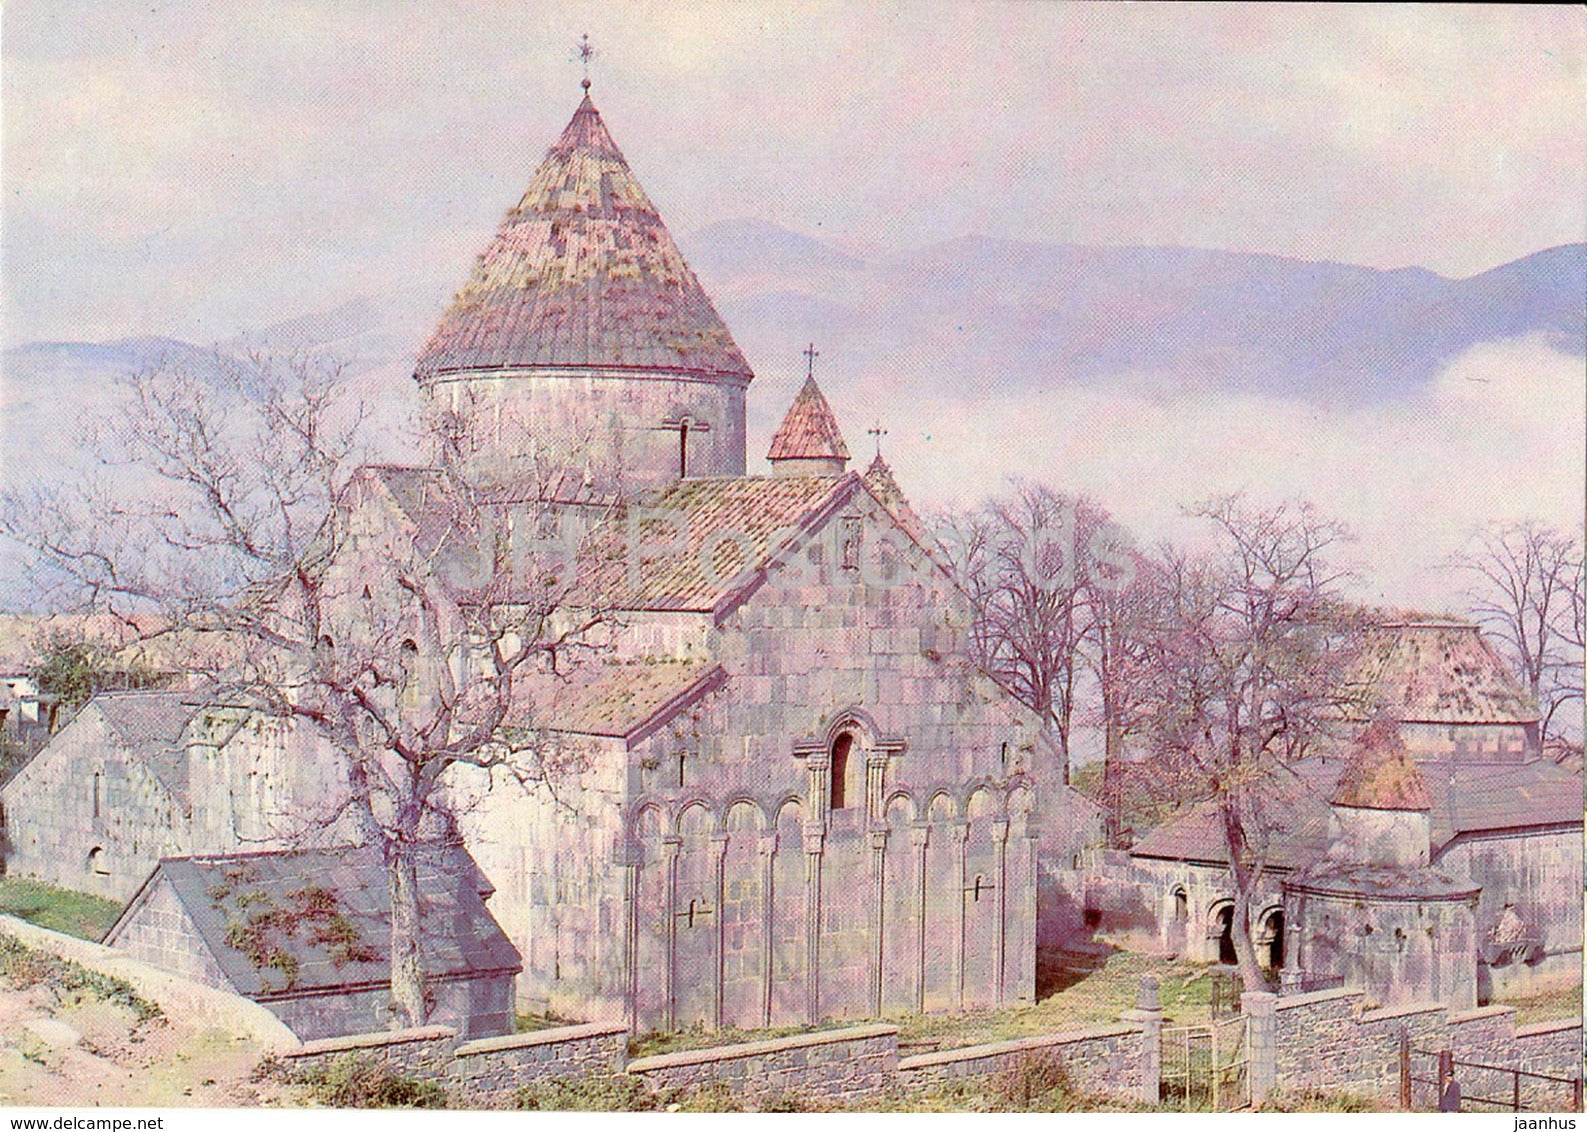 Tumanyan Region - Sanahin monastery - Architectural monument - AVIA - postal stationery - 1983 - Armenia USSR -  unused - JH Postcards